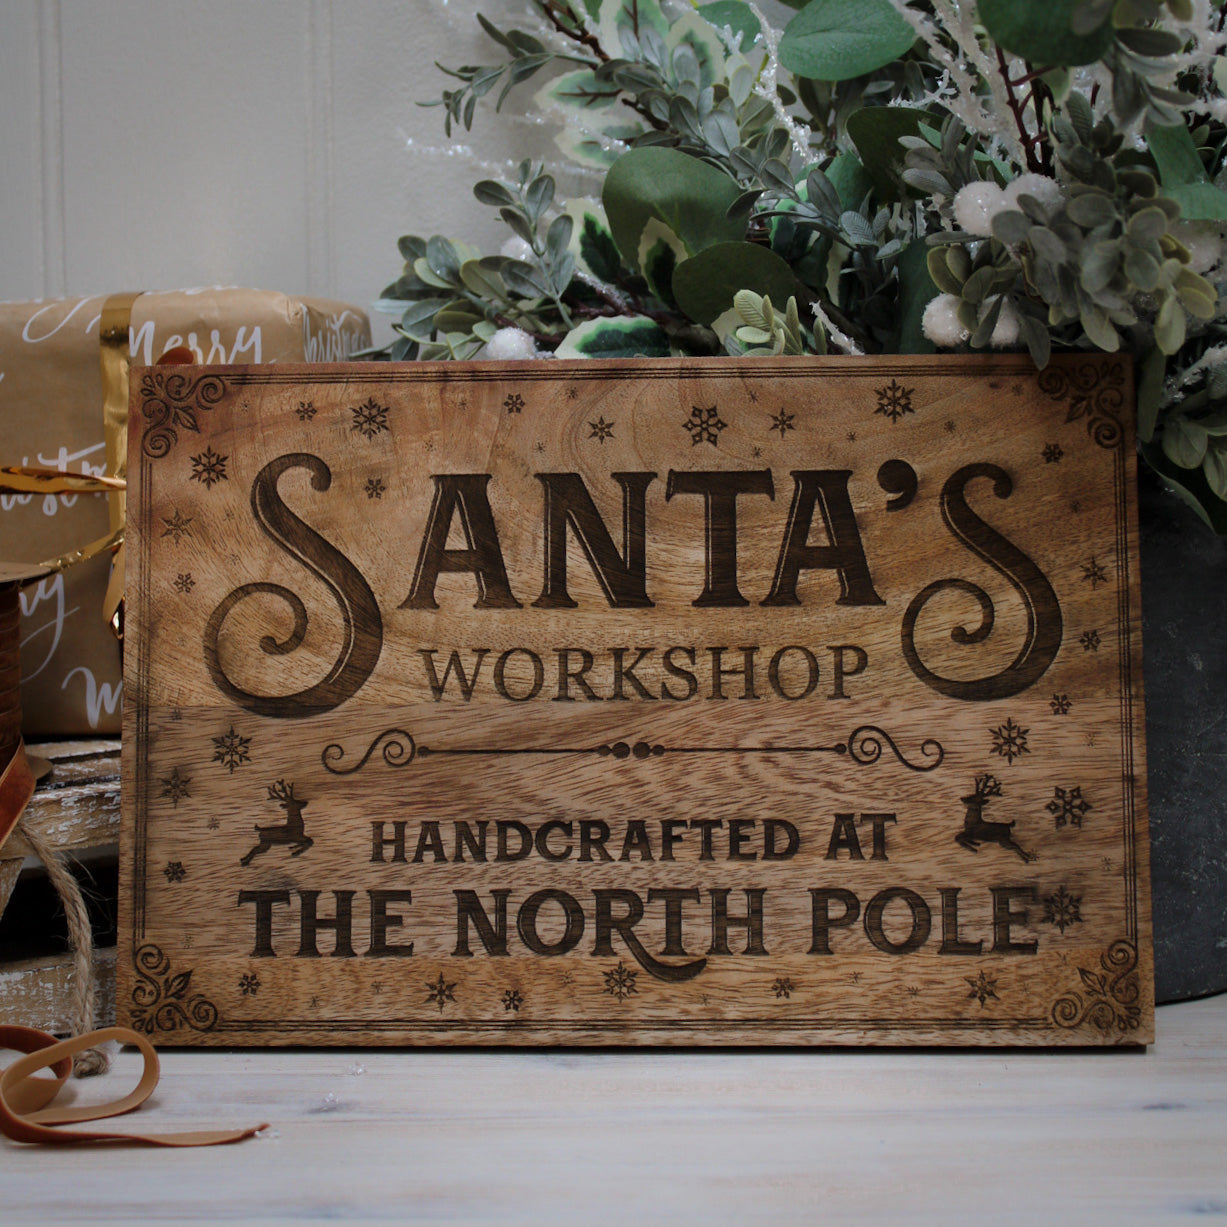 Santa's Workshop Etched Wooden Plaque